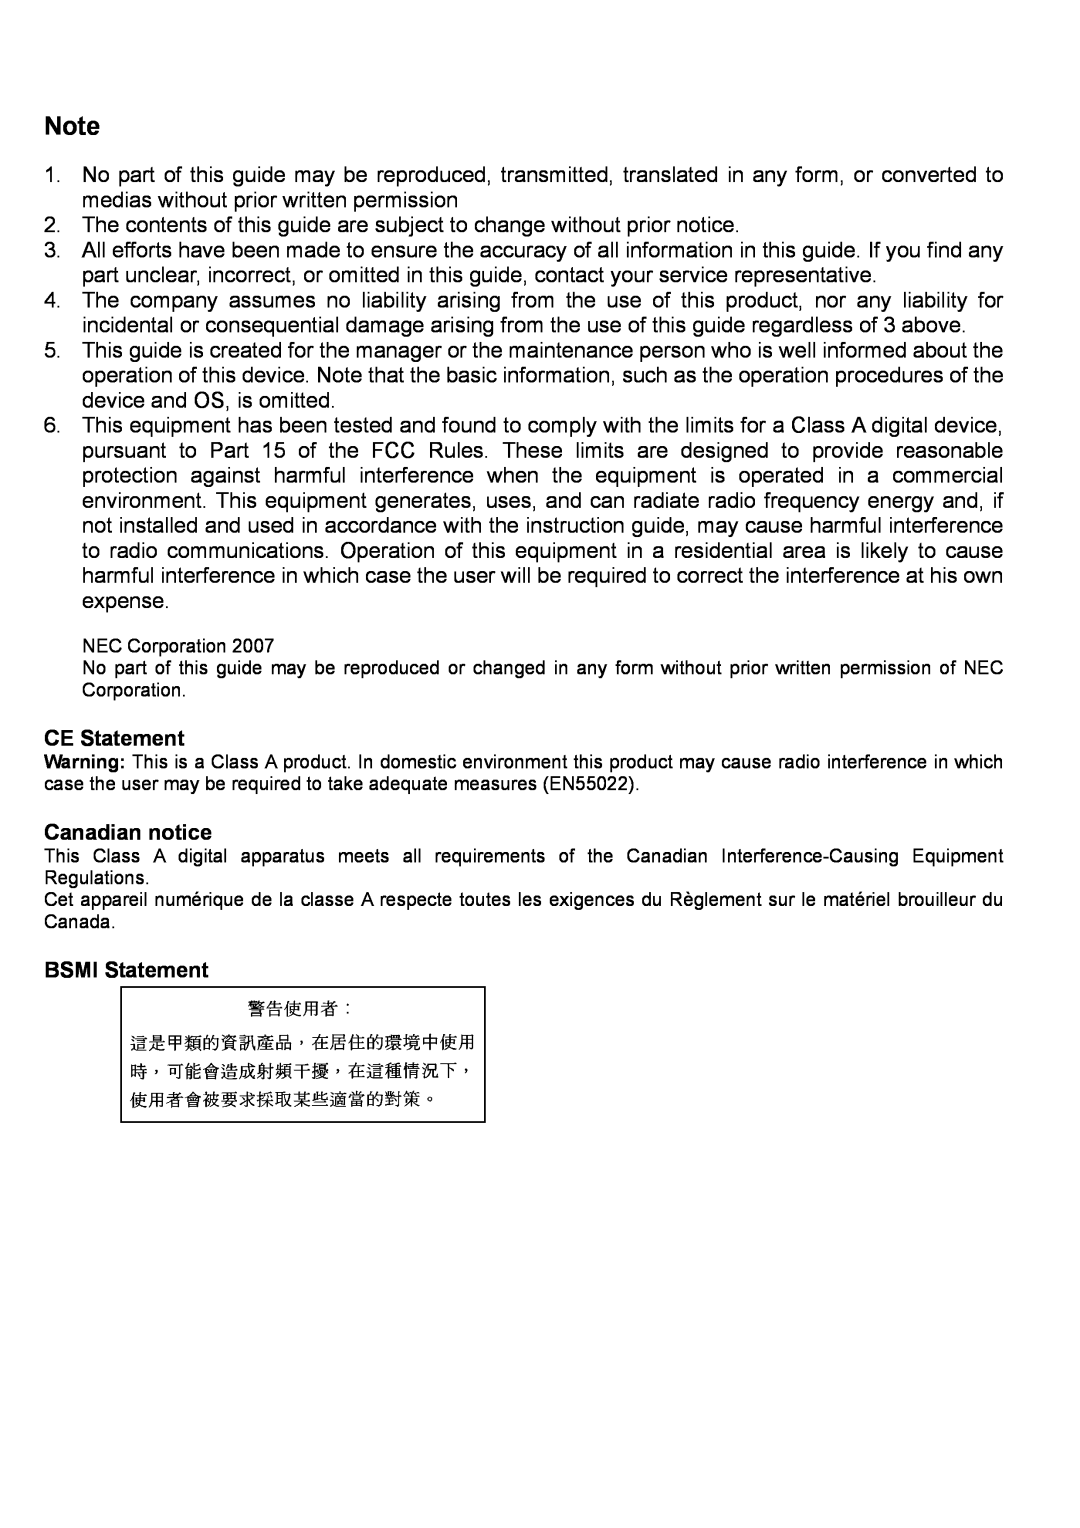 NEC N8406-022 manual CE Statement, Canadian notice, BSMI Statement 